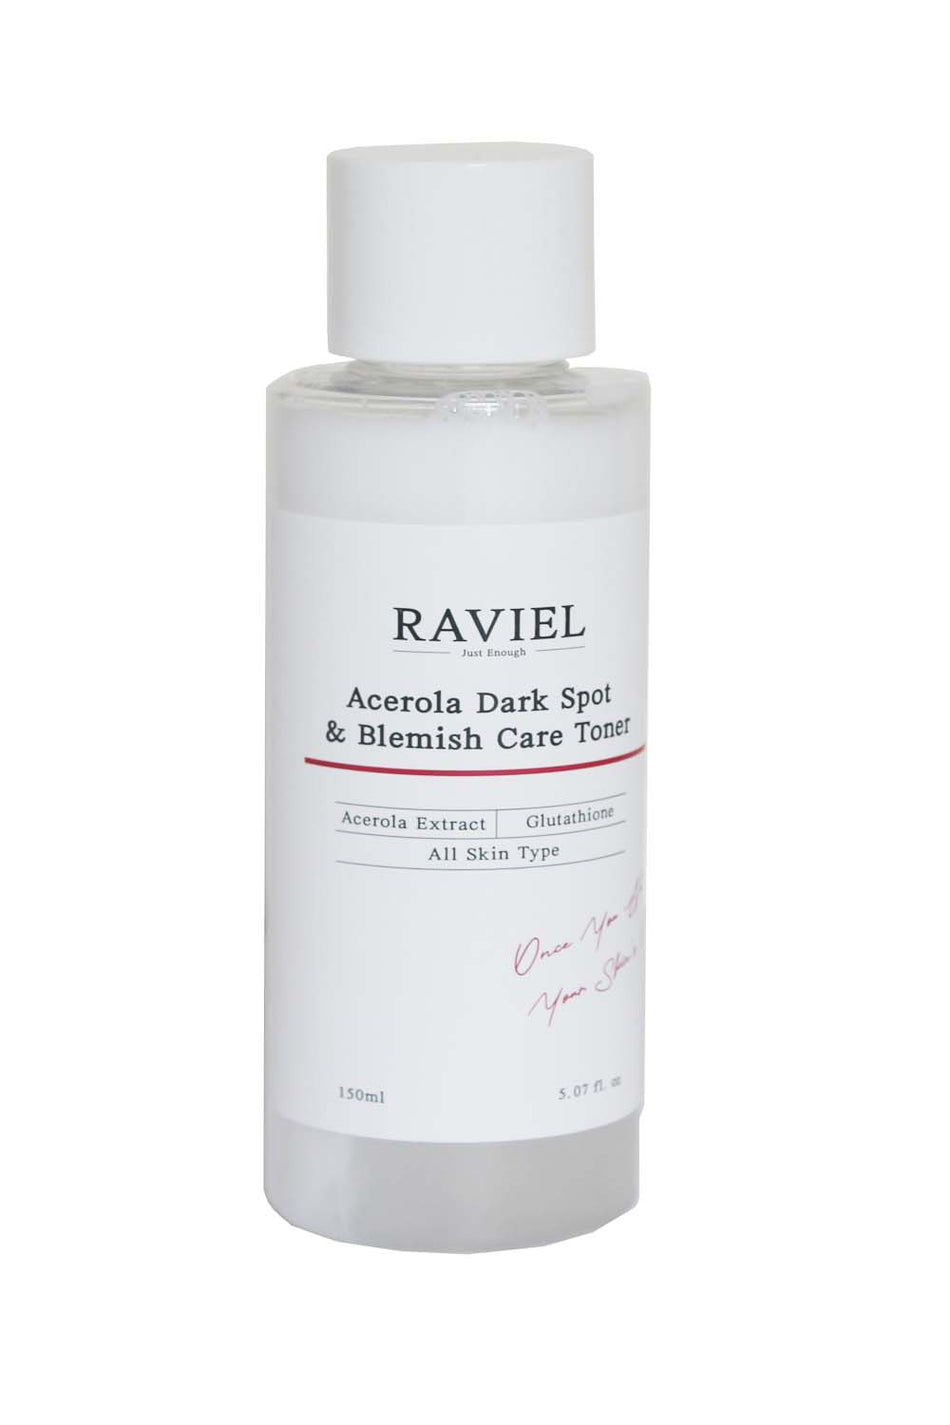 RAVIEL Acerola Dark Spot & Blemish Care Toner